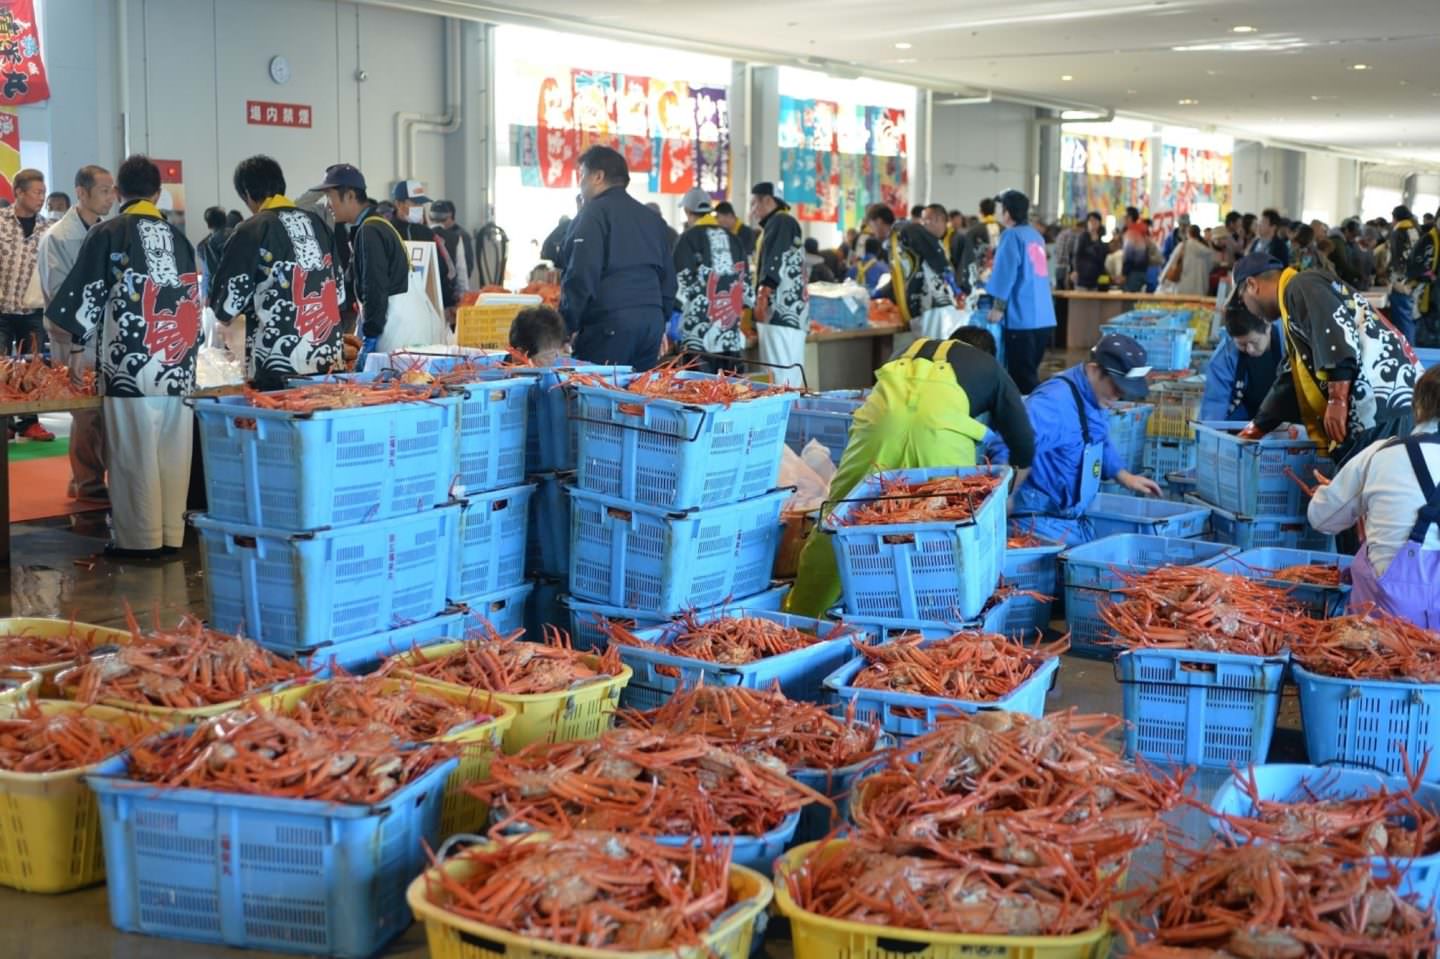 Shinminato Kanikani Seafood Glass shrimp Festival